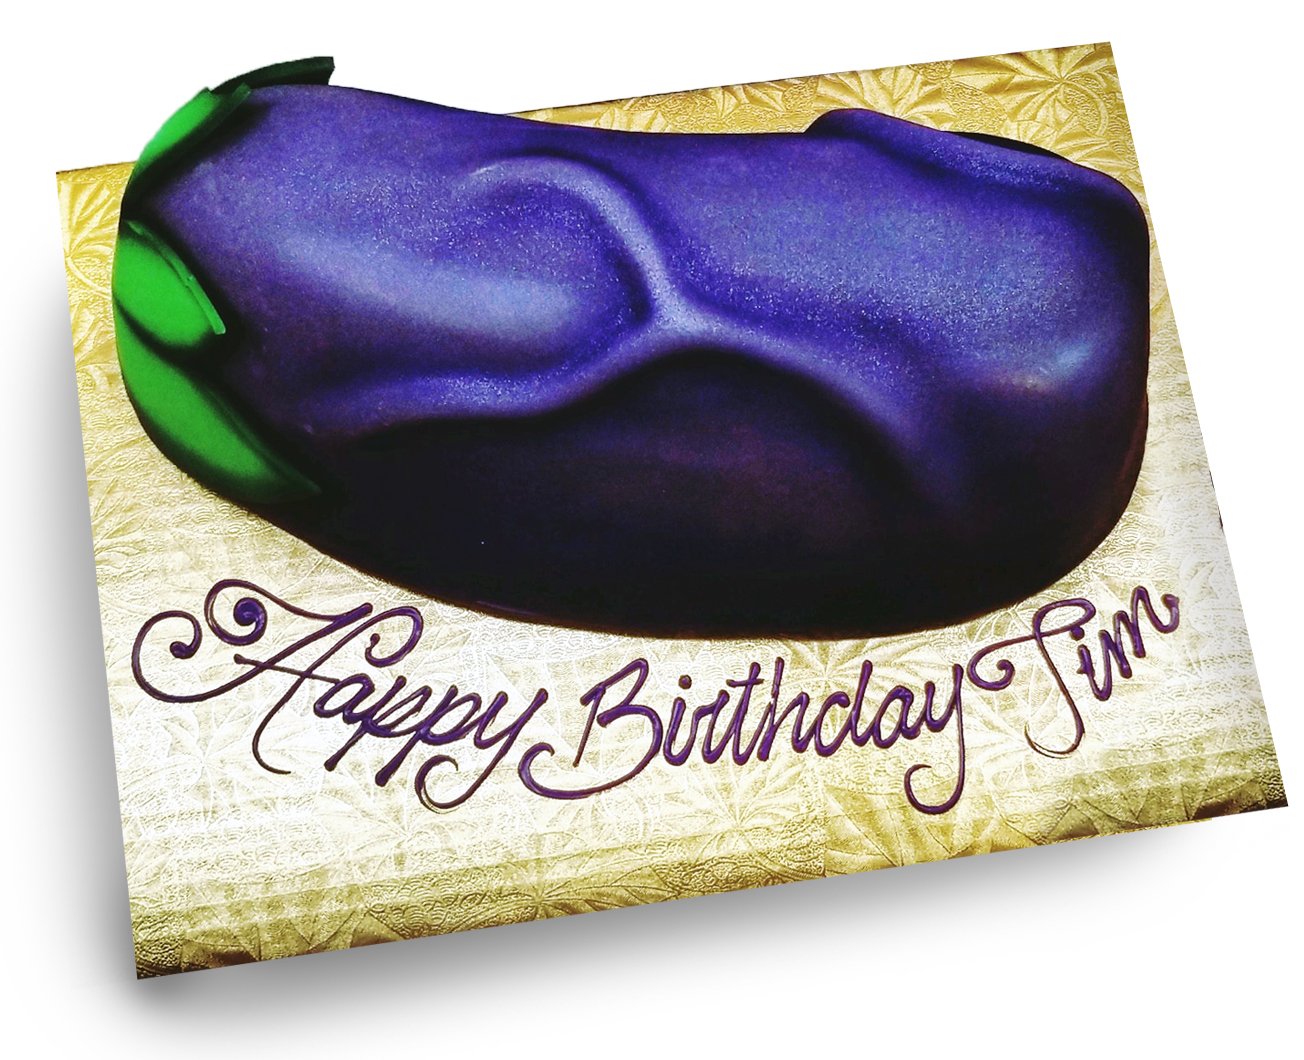 AB030. Fondant covered, eggplant emoji shaped birthday cake